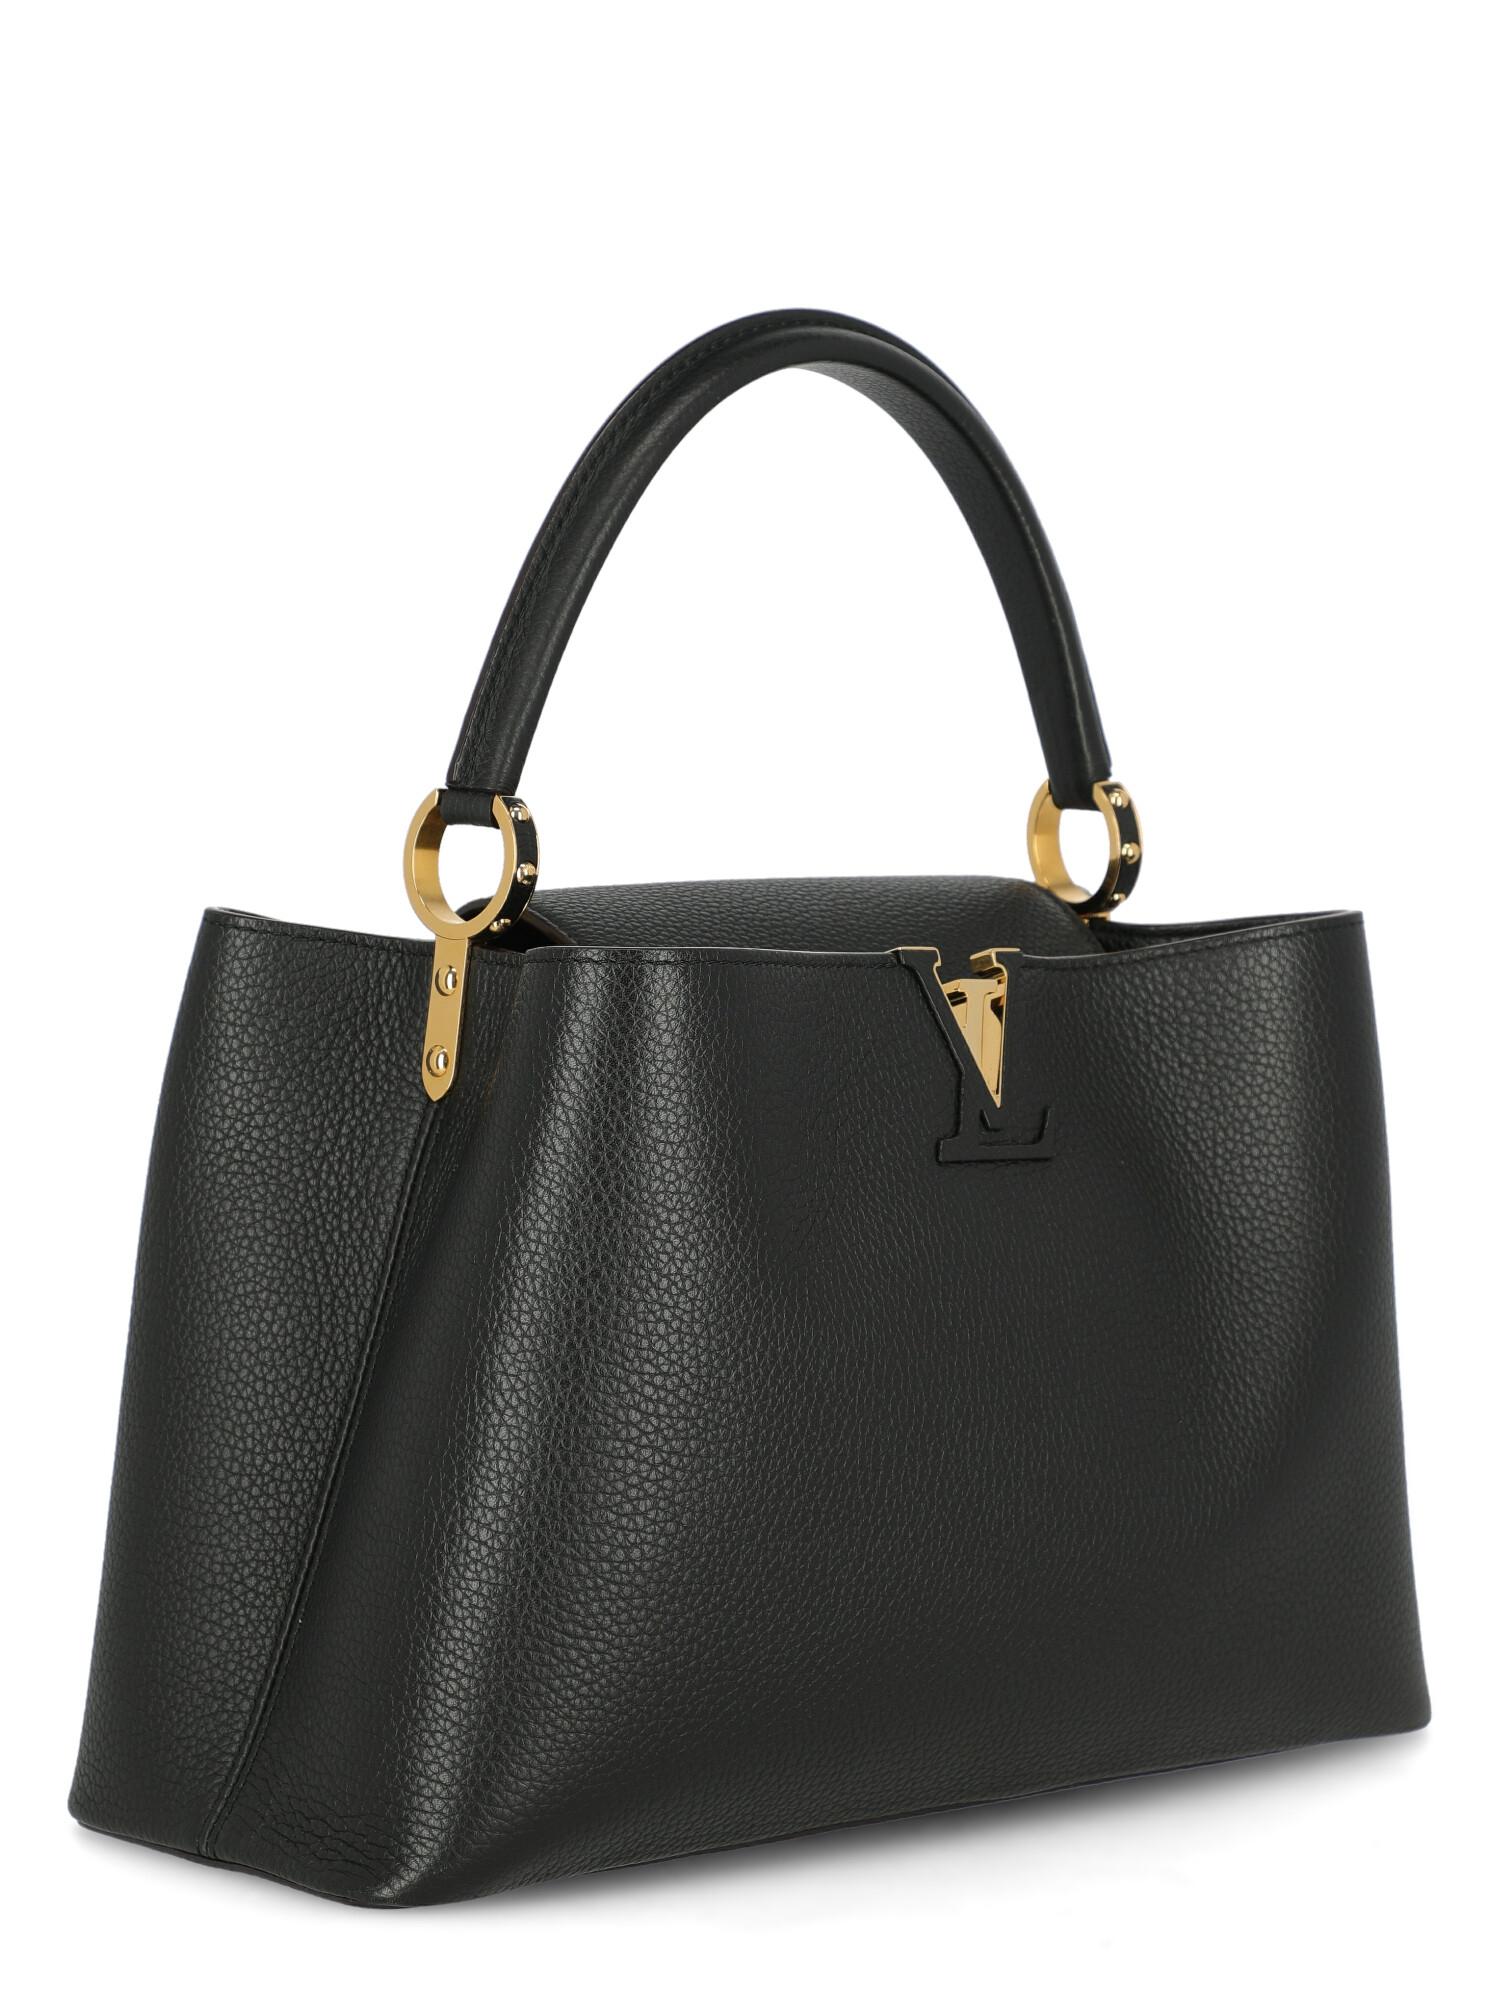 Louis Vuitton Women's Handbag Capucines Black Leather In Good Condition For Sale In Milan, IT